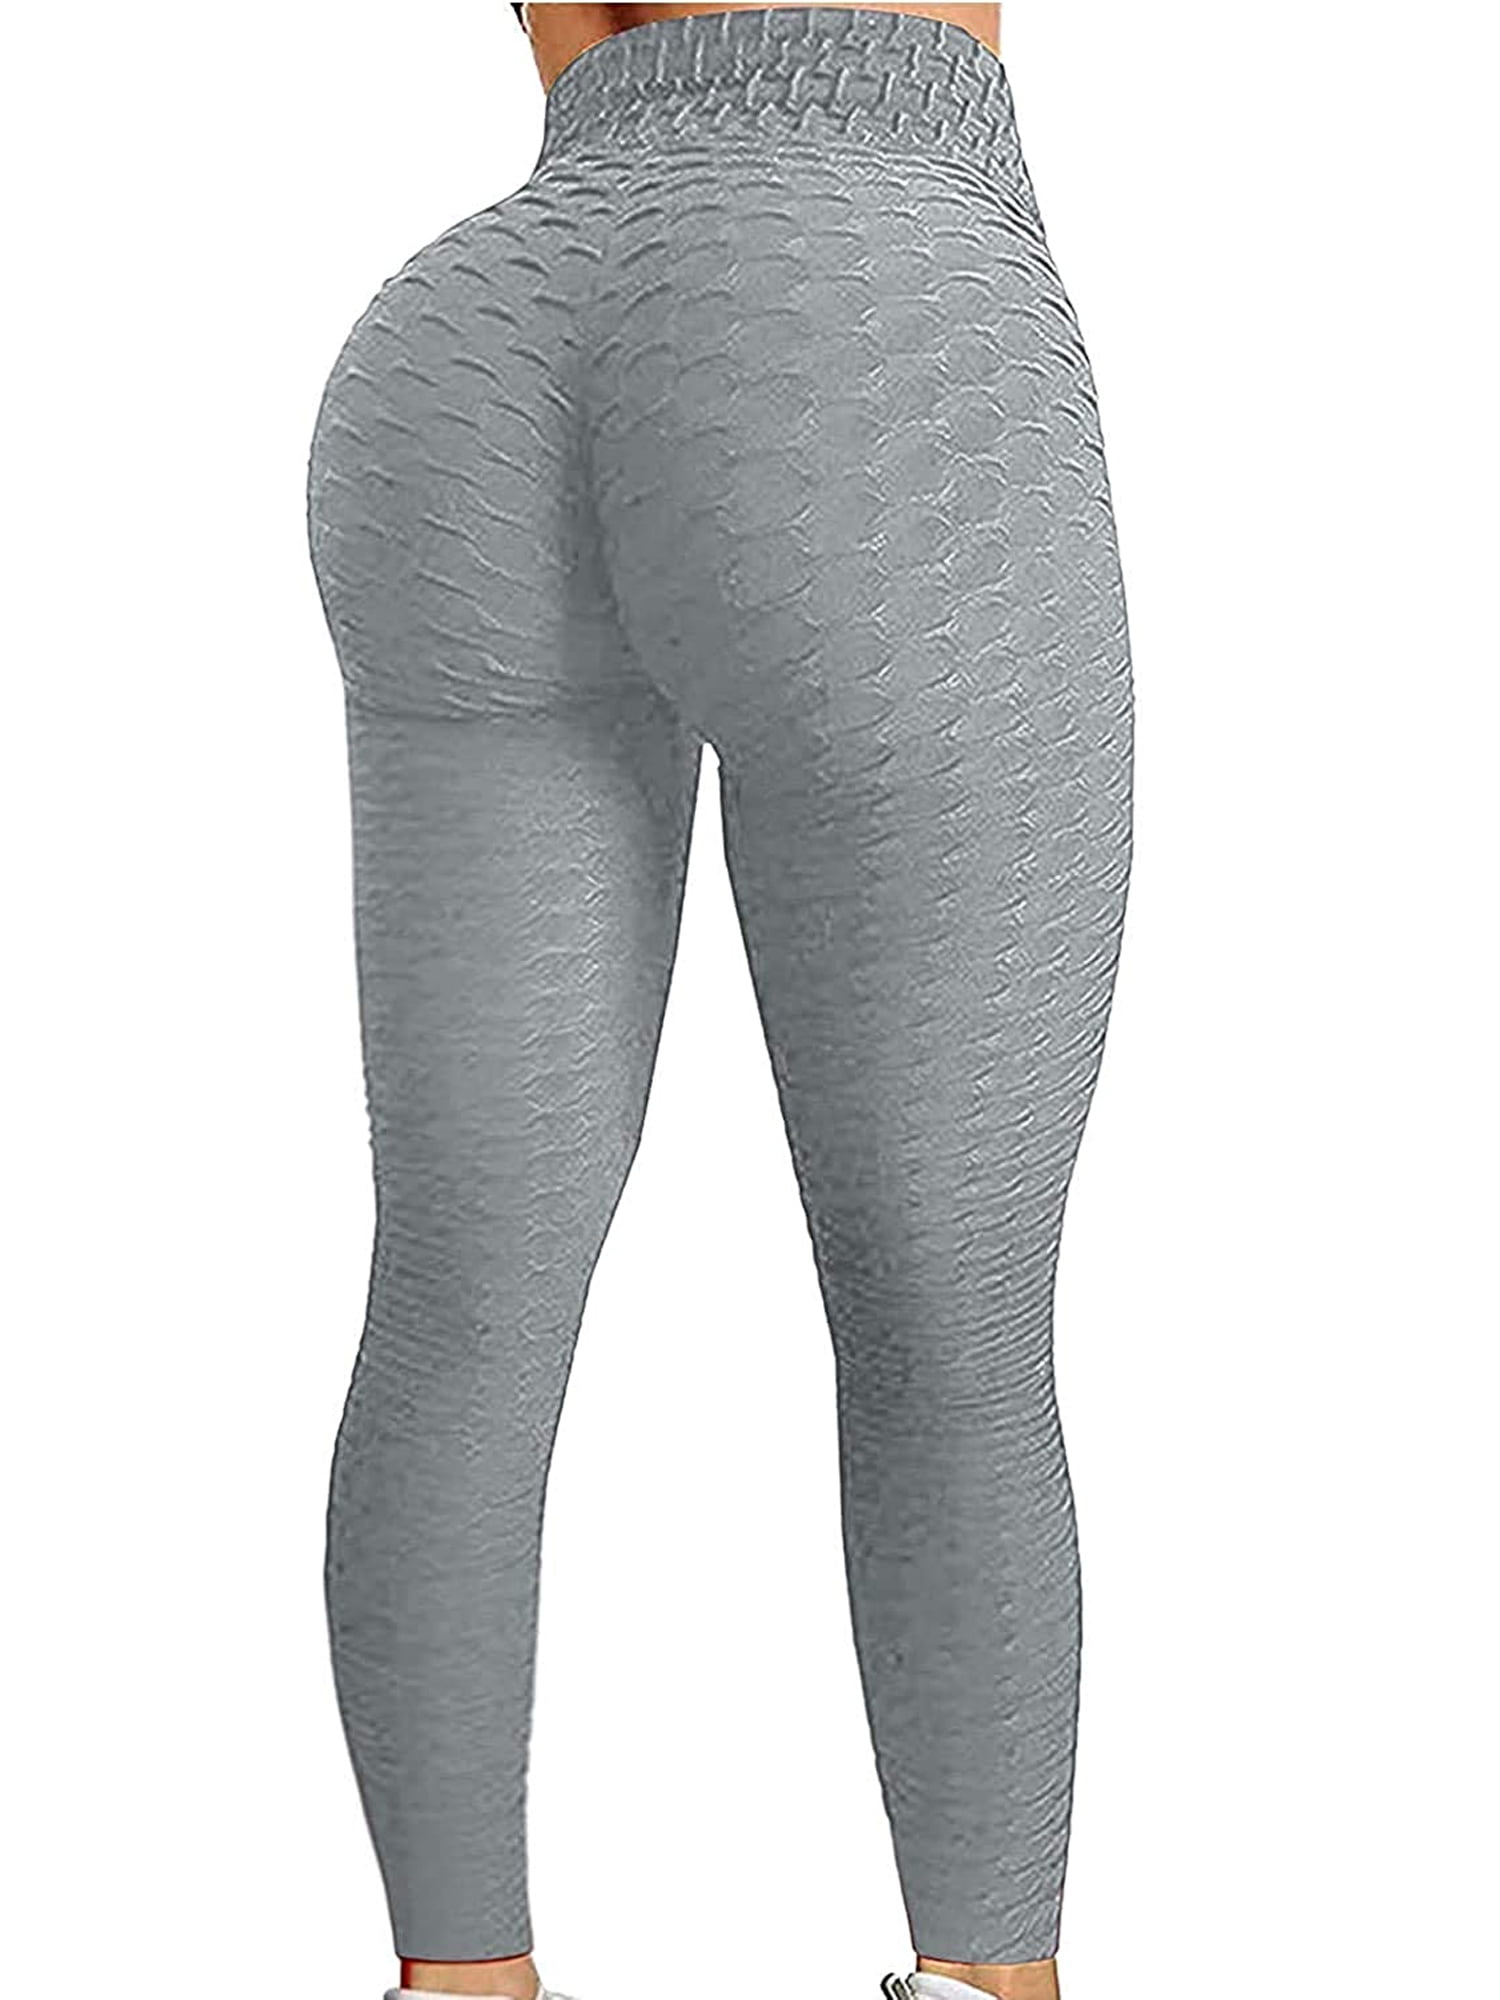 Women's Yoga Gym Anti-Cellulite Legging Fitness Solid Butt Lift Pant Elastic Lot 